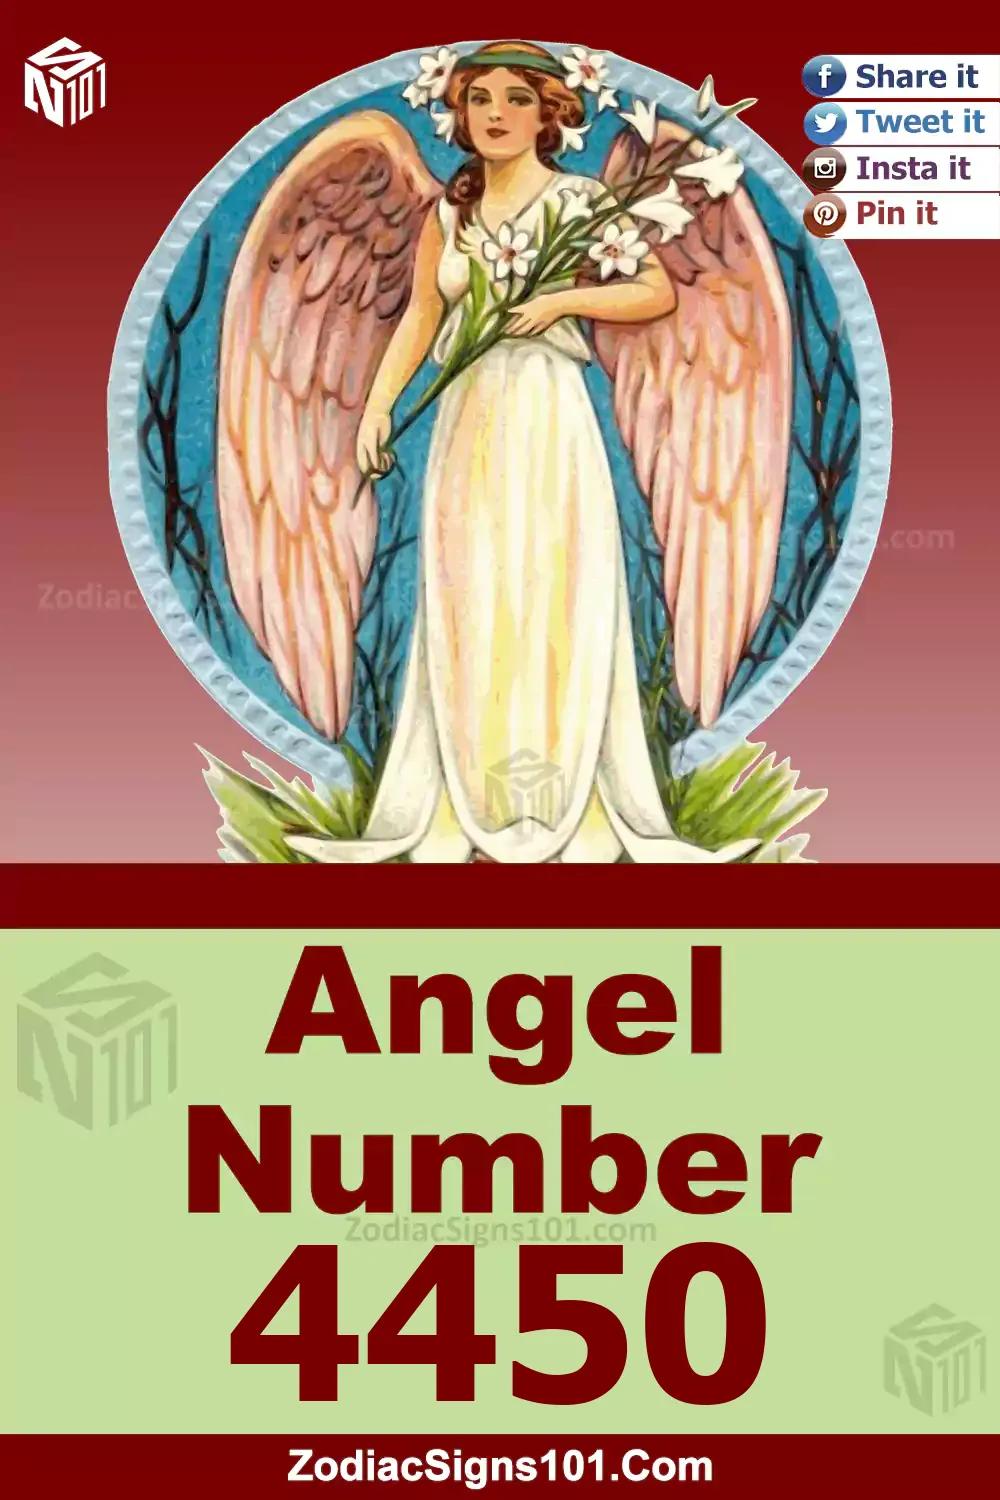 4450-Angel-Number-Meaning.jpg